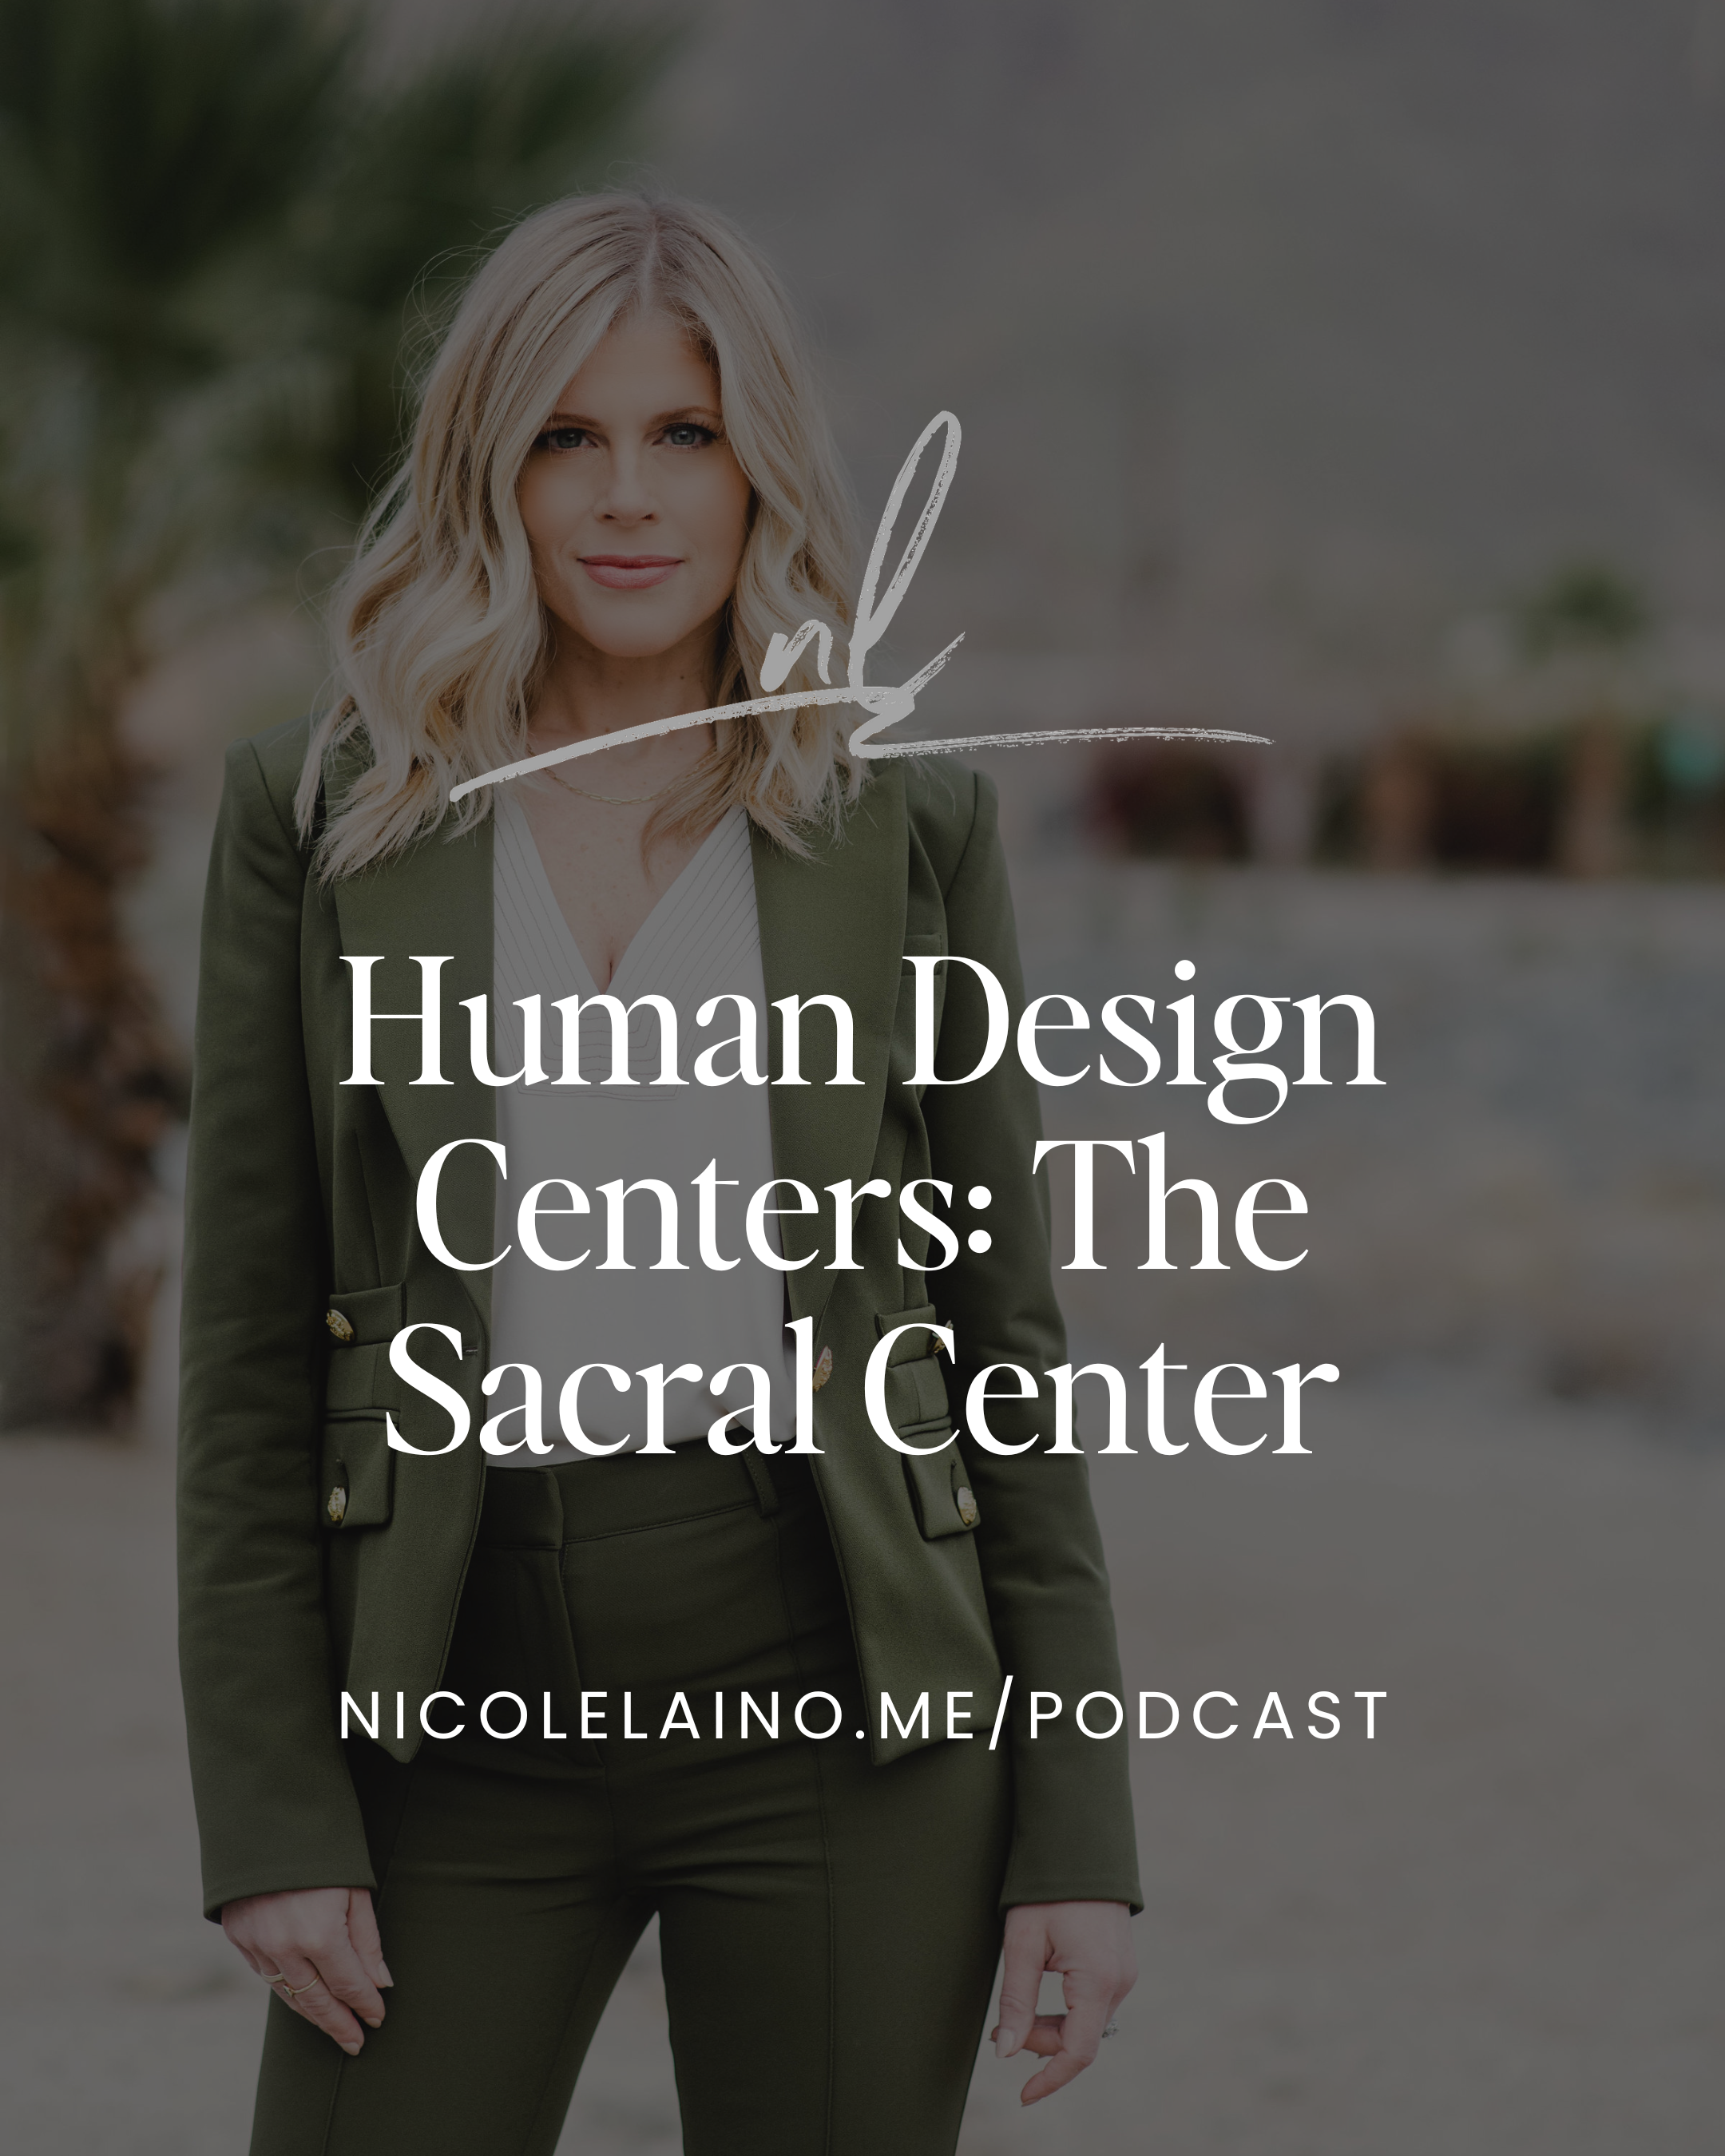 Human Design Centers: The Sacral Center